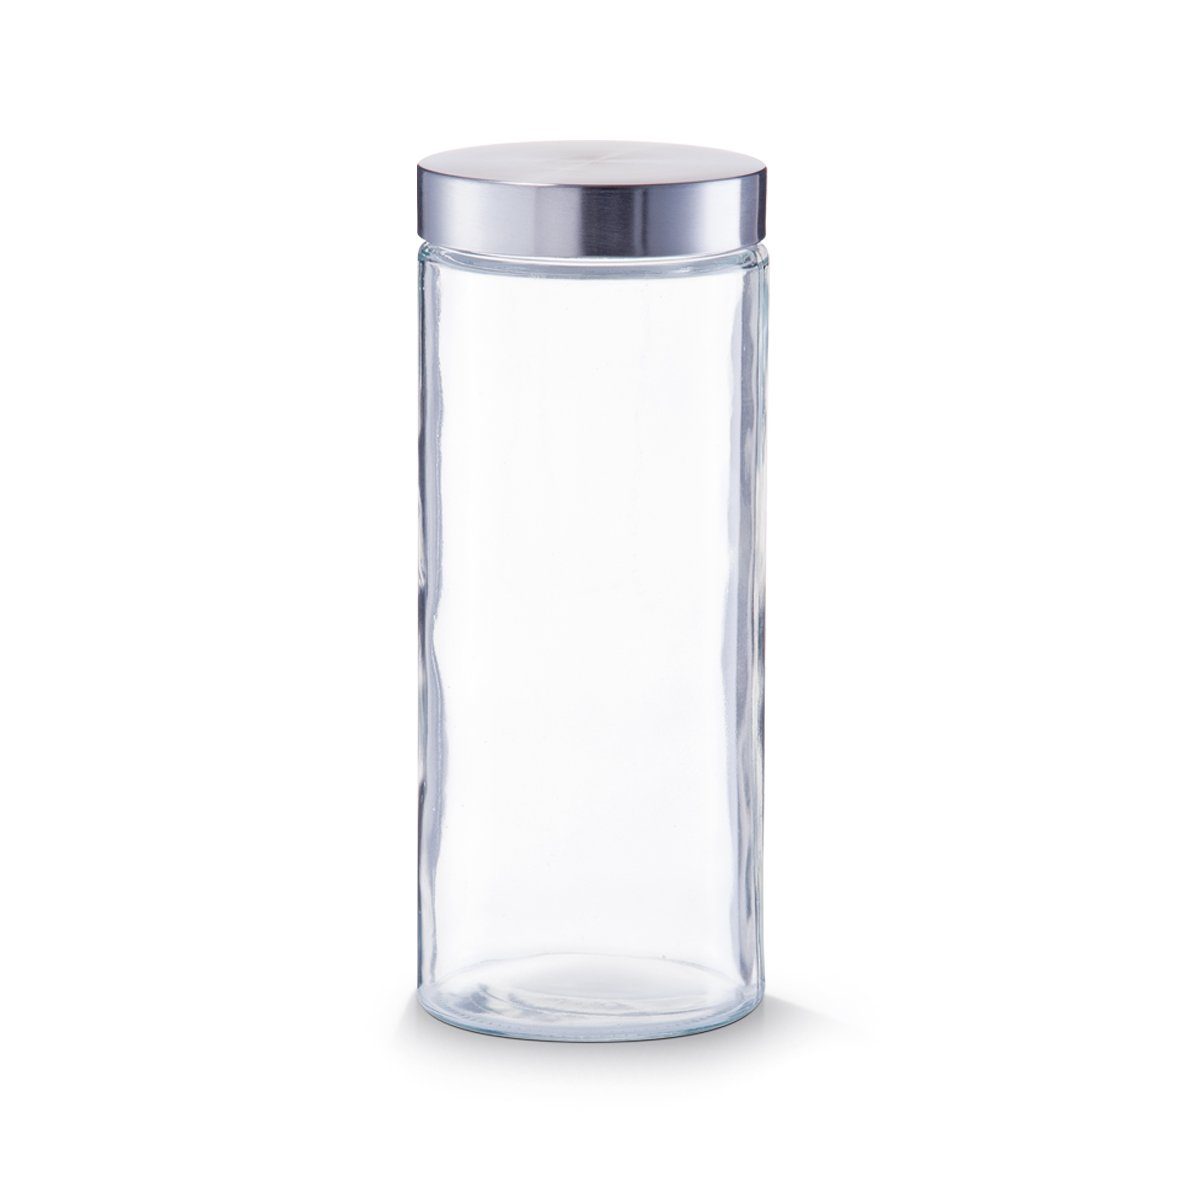 Zeller Present Vorratsglas Vorratsglas m. Edelstahldeckel, Glas/Edelstahl, 2100 ml, Glas/Edelstahl, transparent, Ø11 x 27 cm